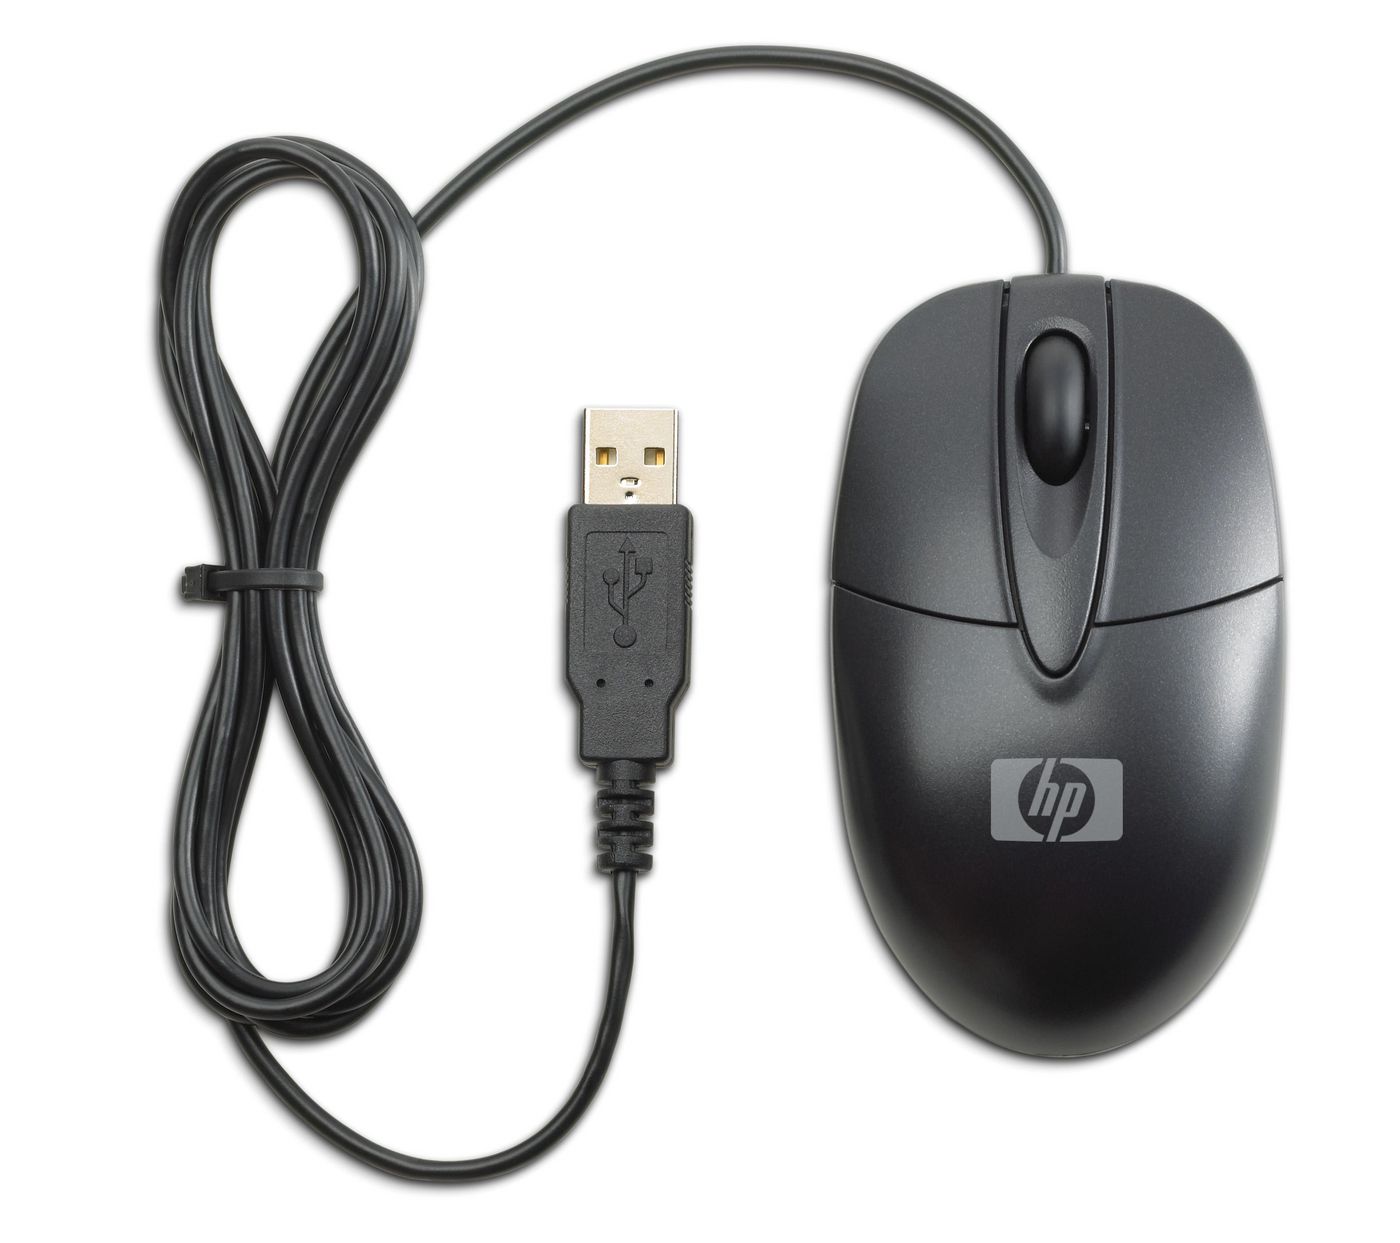 HP OPTICAL USB MOUSE